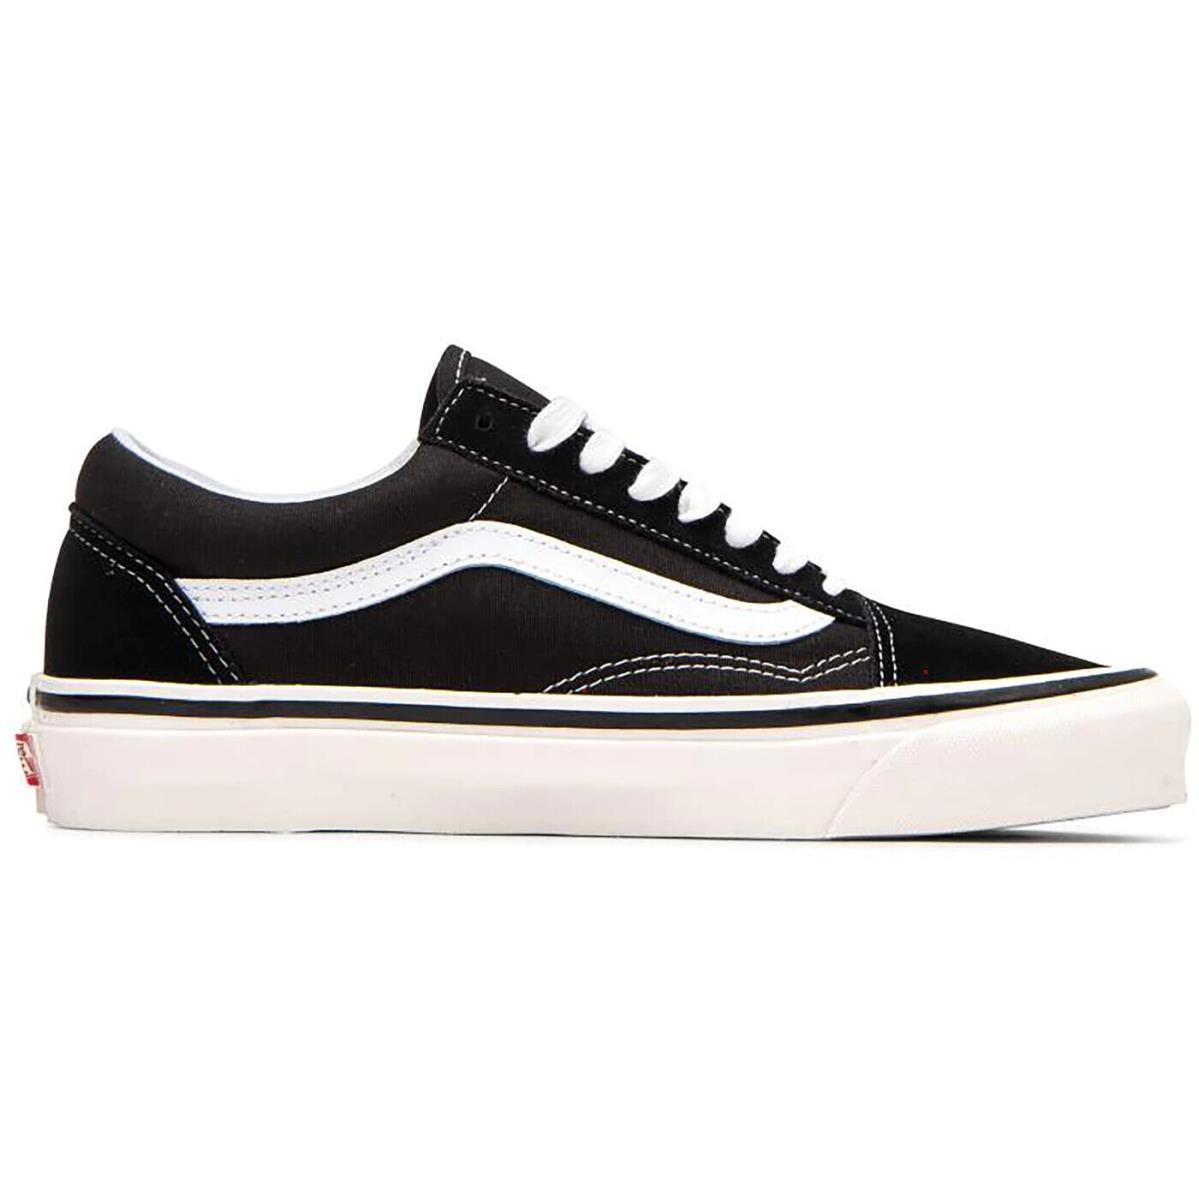 Vans Anaheim Old Skool 36 DX Skate Shoes Sneaker Black/white VN0A38G2PXC 3.5-13